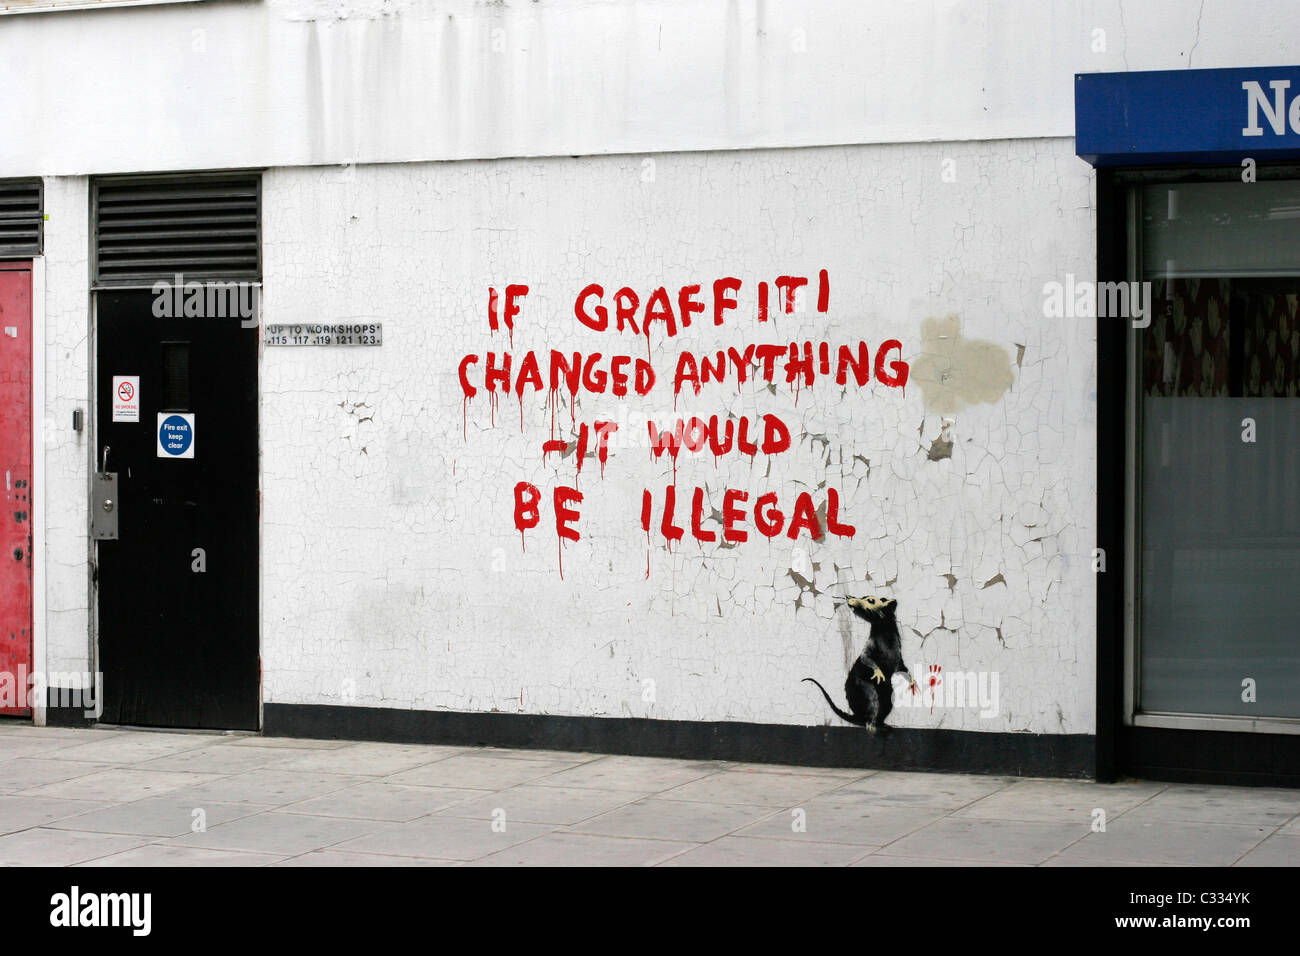 Banksy Graffiti on a London wall, If graffiti changed anything - it would be illegal Stock Photo